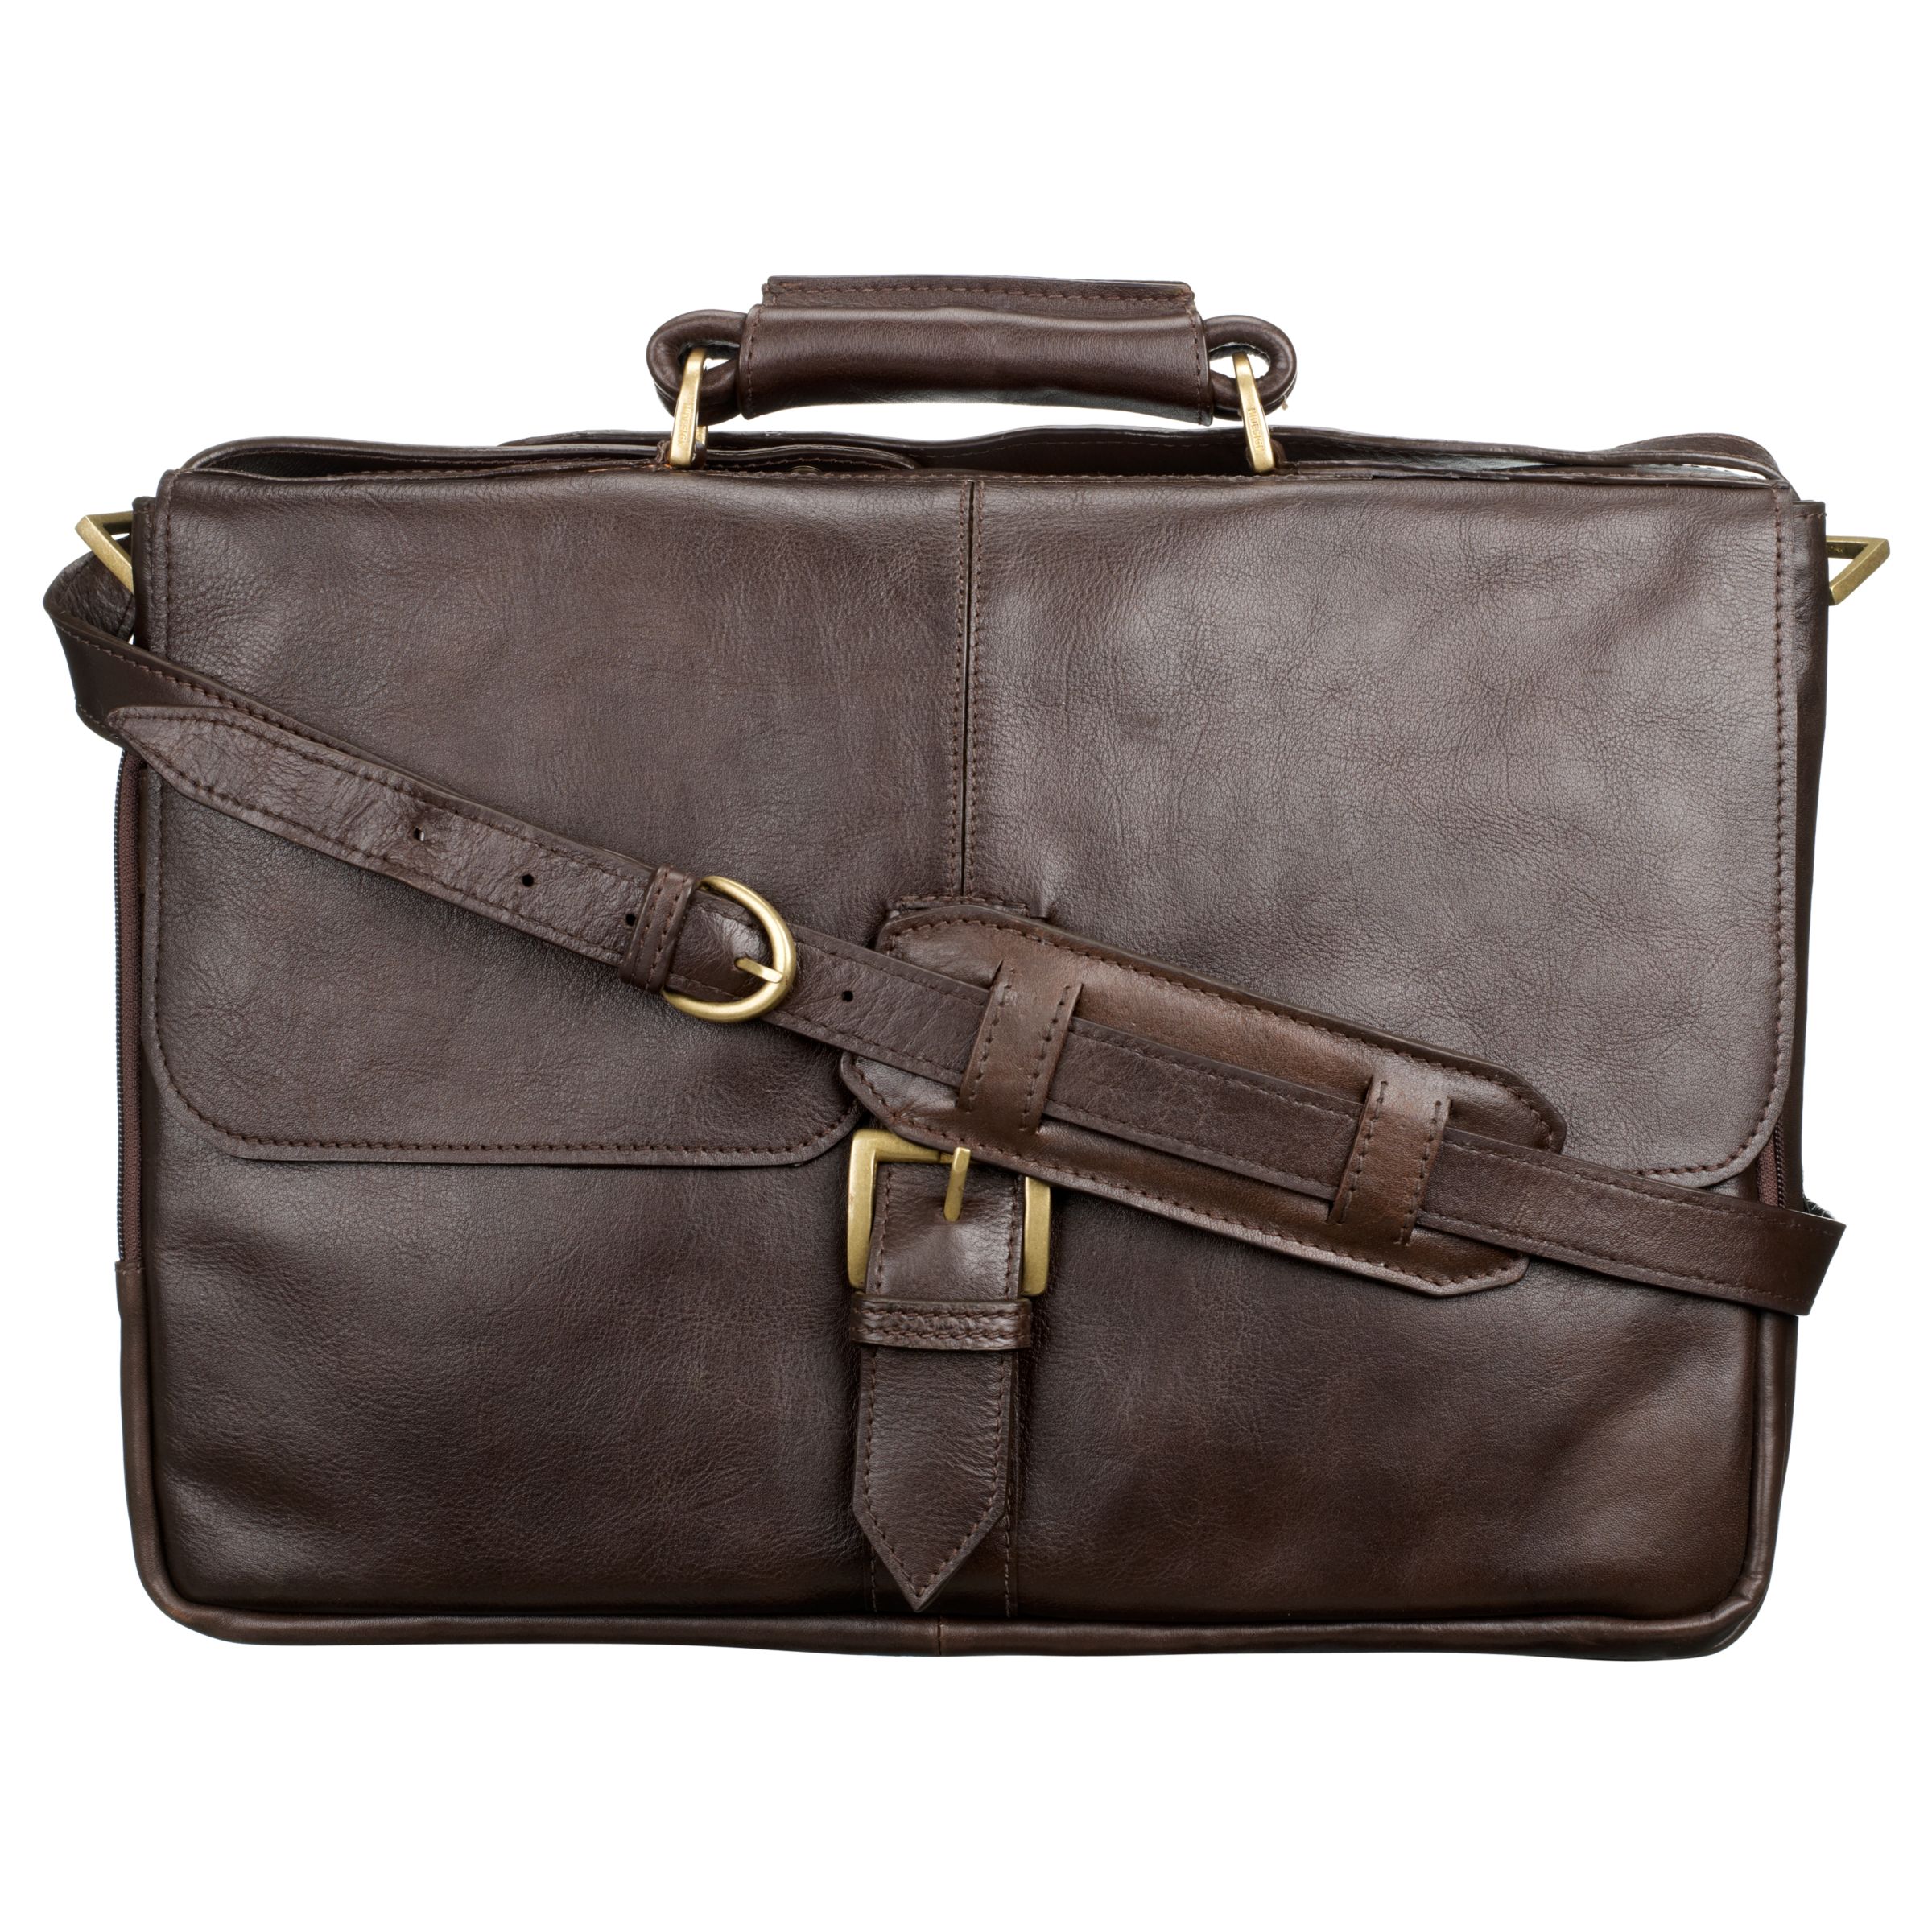 Hidesign Gordon Leather Briefcase, Brown at John Lewis